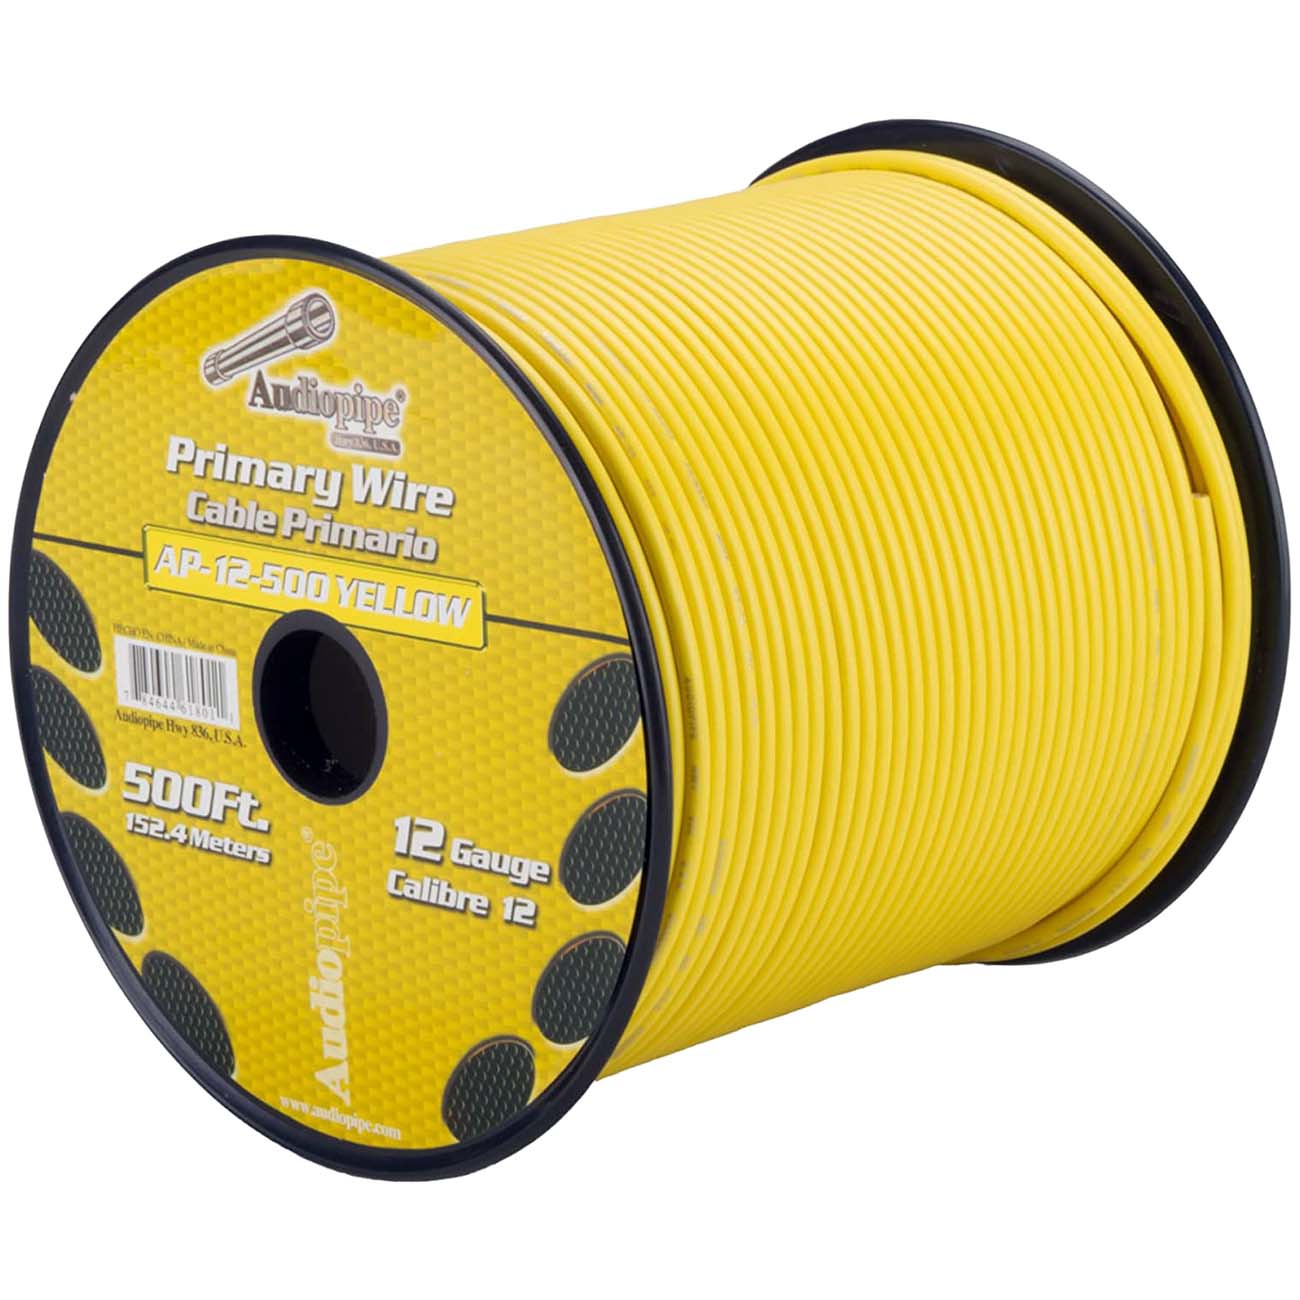 Audiopipe 12 Gauge 500ft Primary Wire Yellow